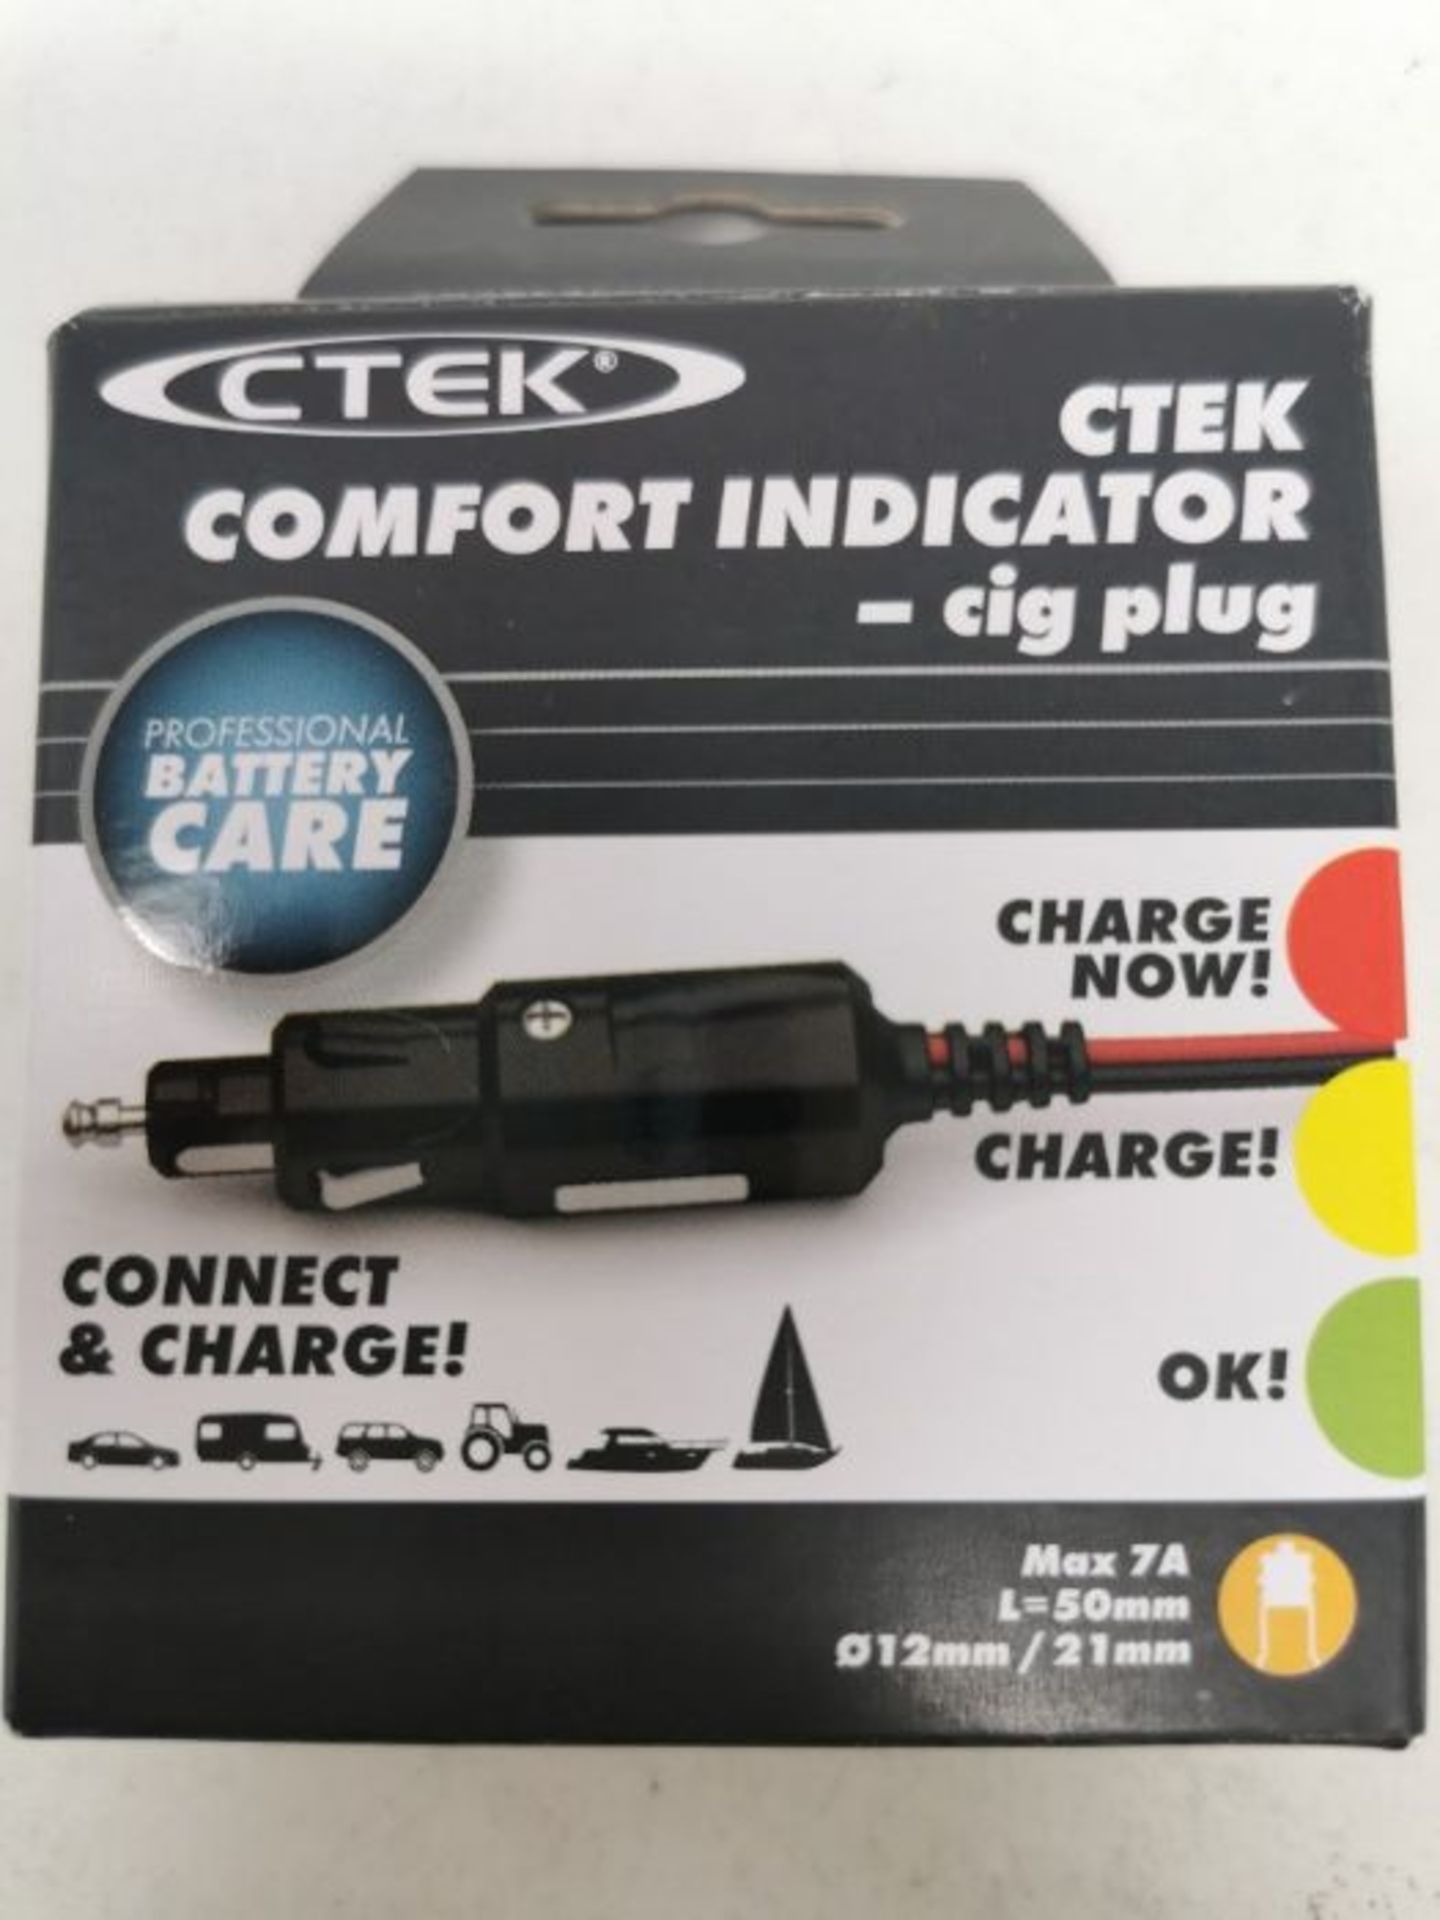 CTEK 56-870 Comfort Indicator Cig Plug - Black - Image 2 of 3